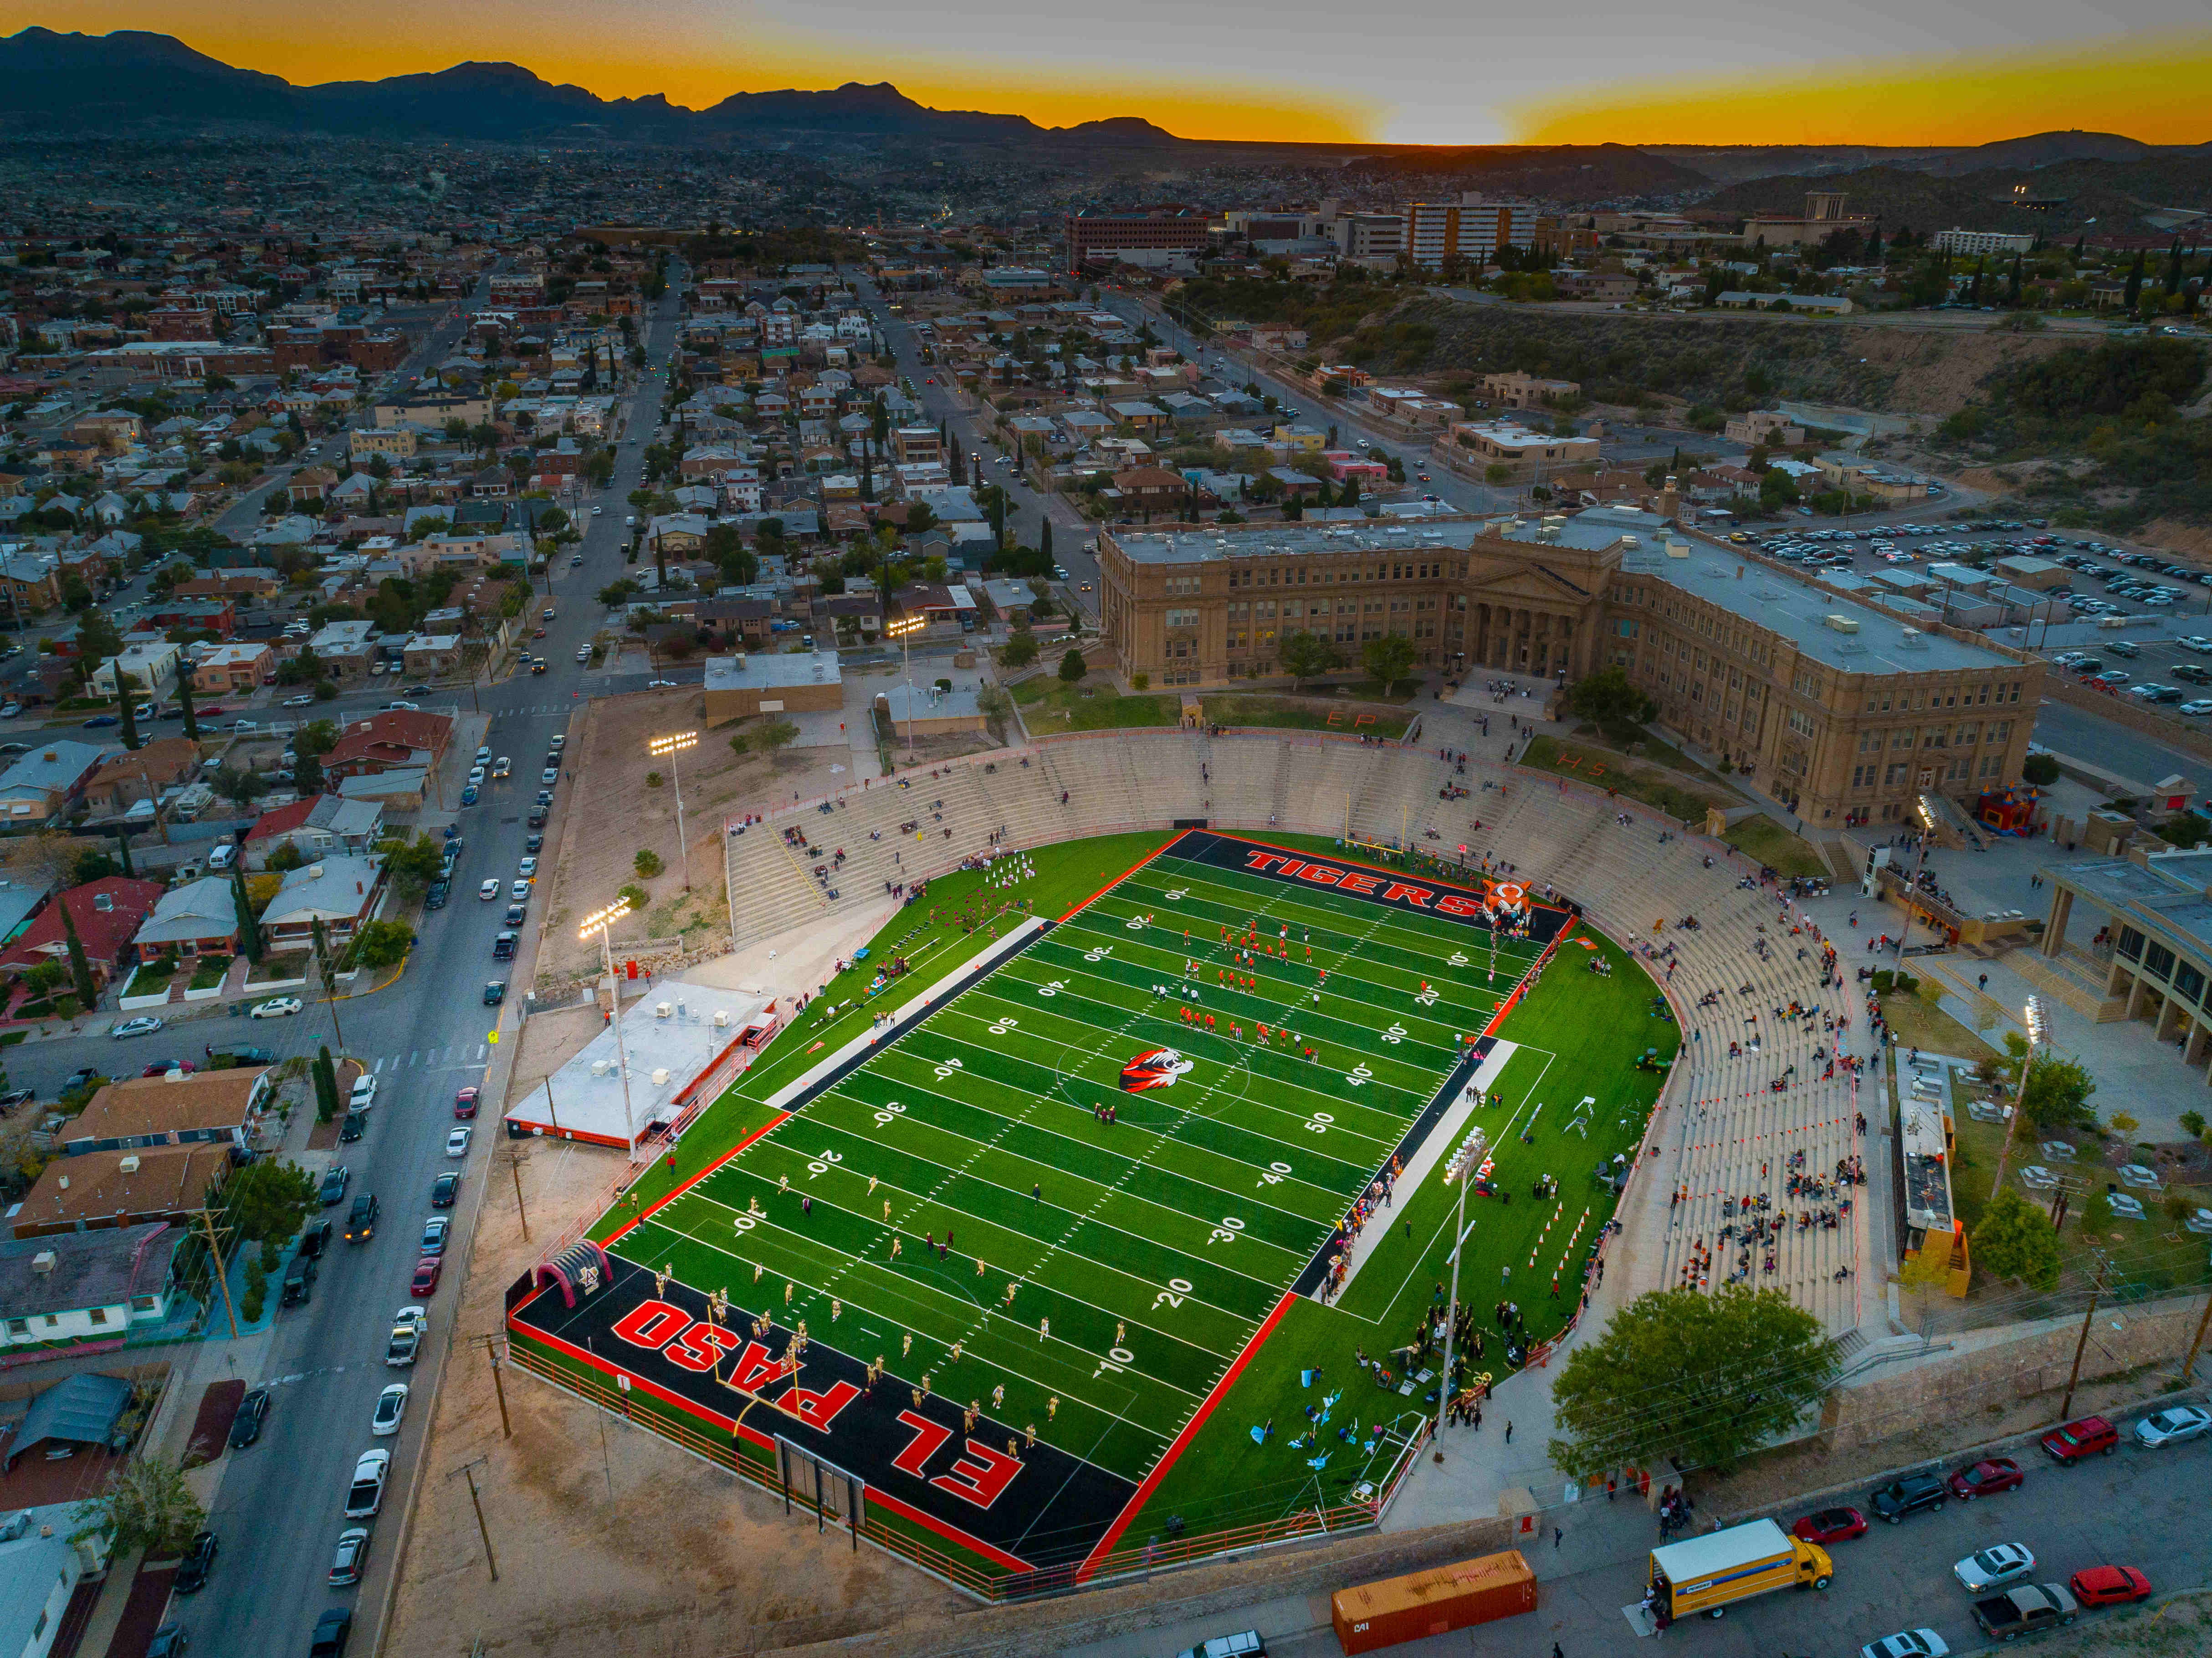 America has voted! El Paso’s Jones stadium 2nd best HS football stadium